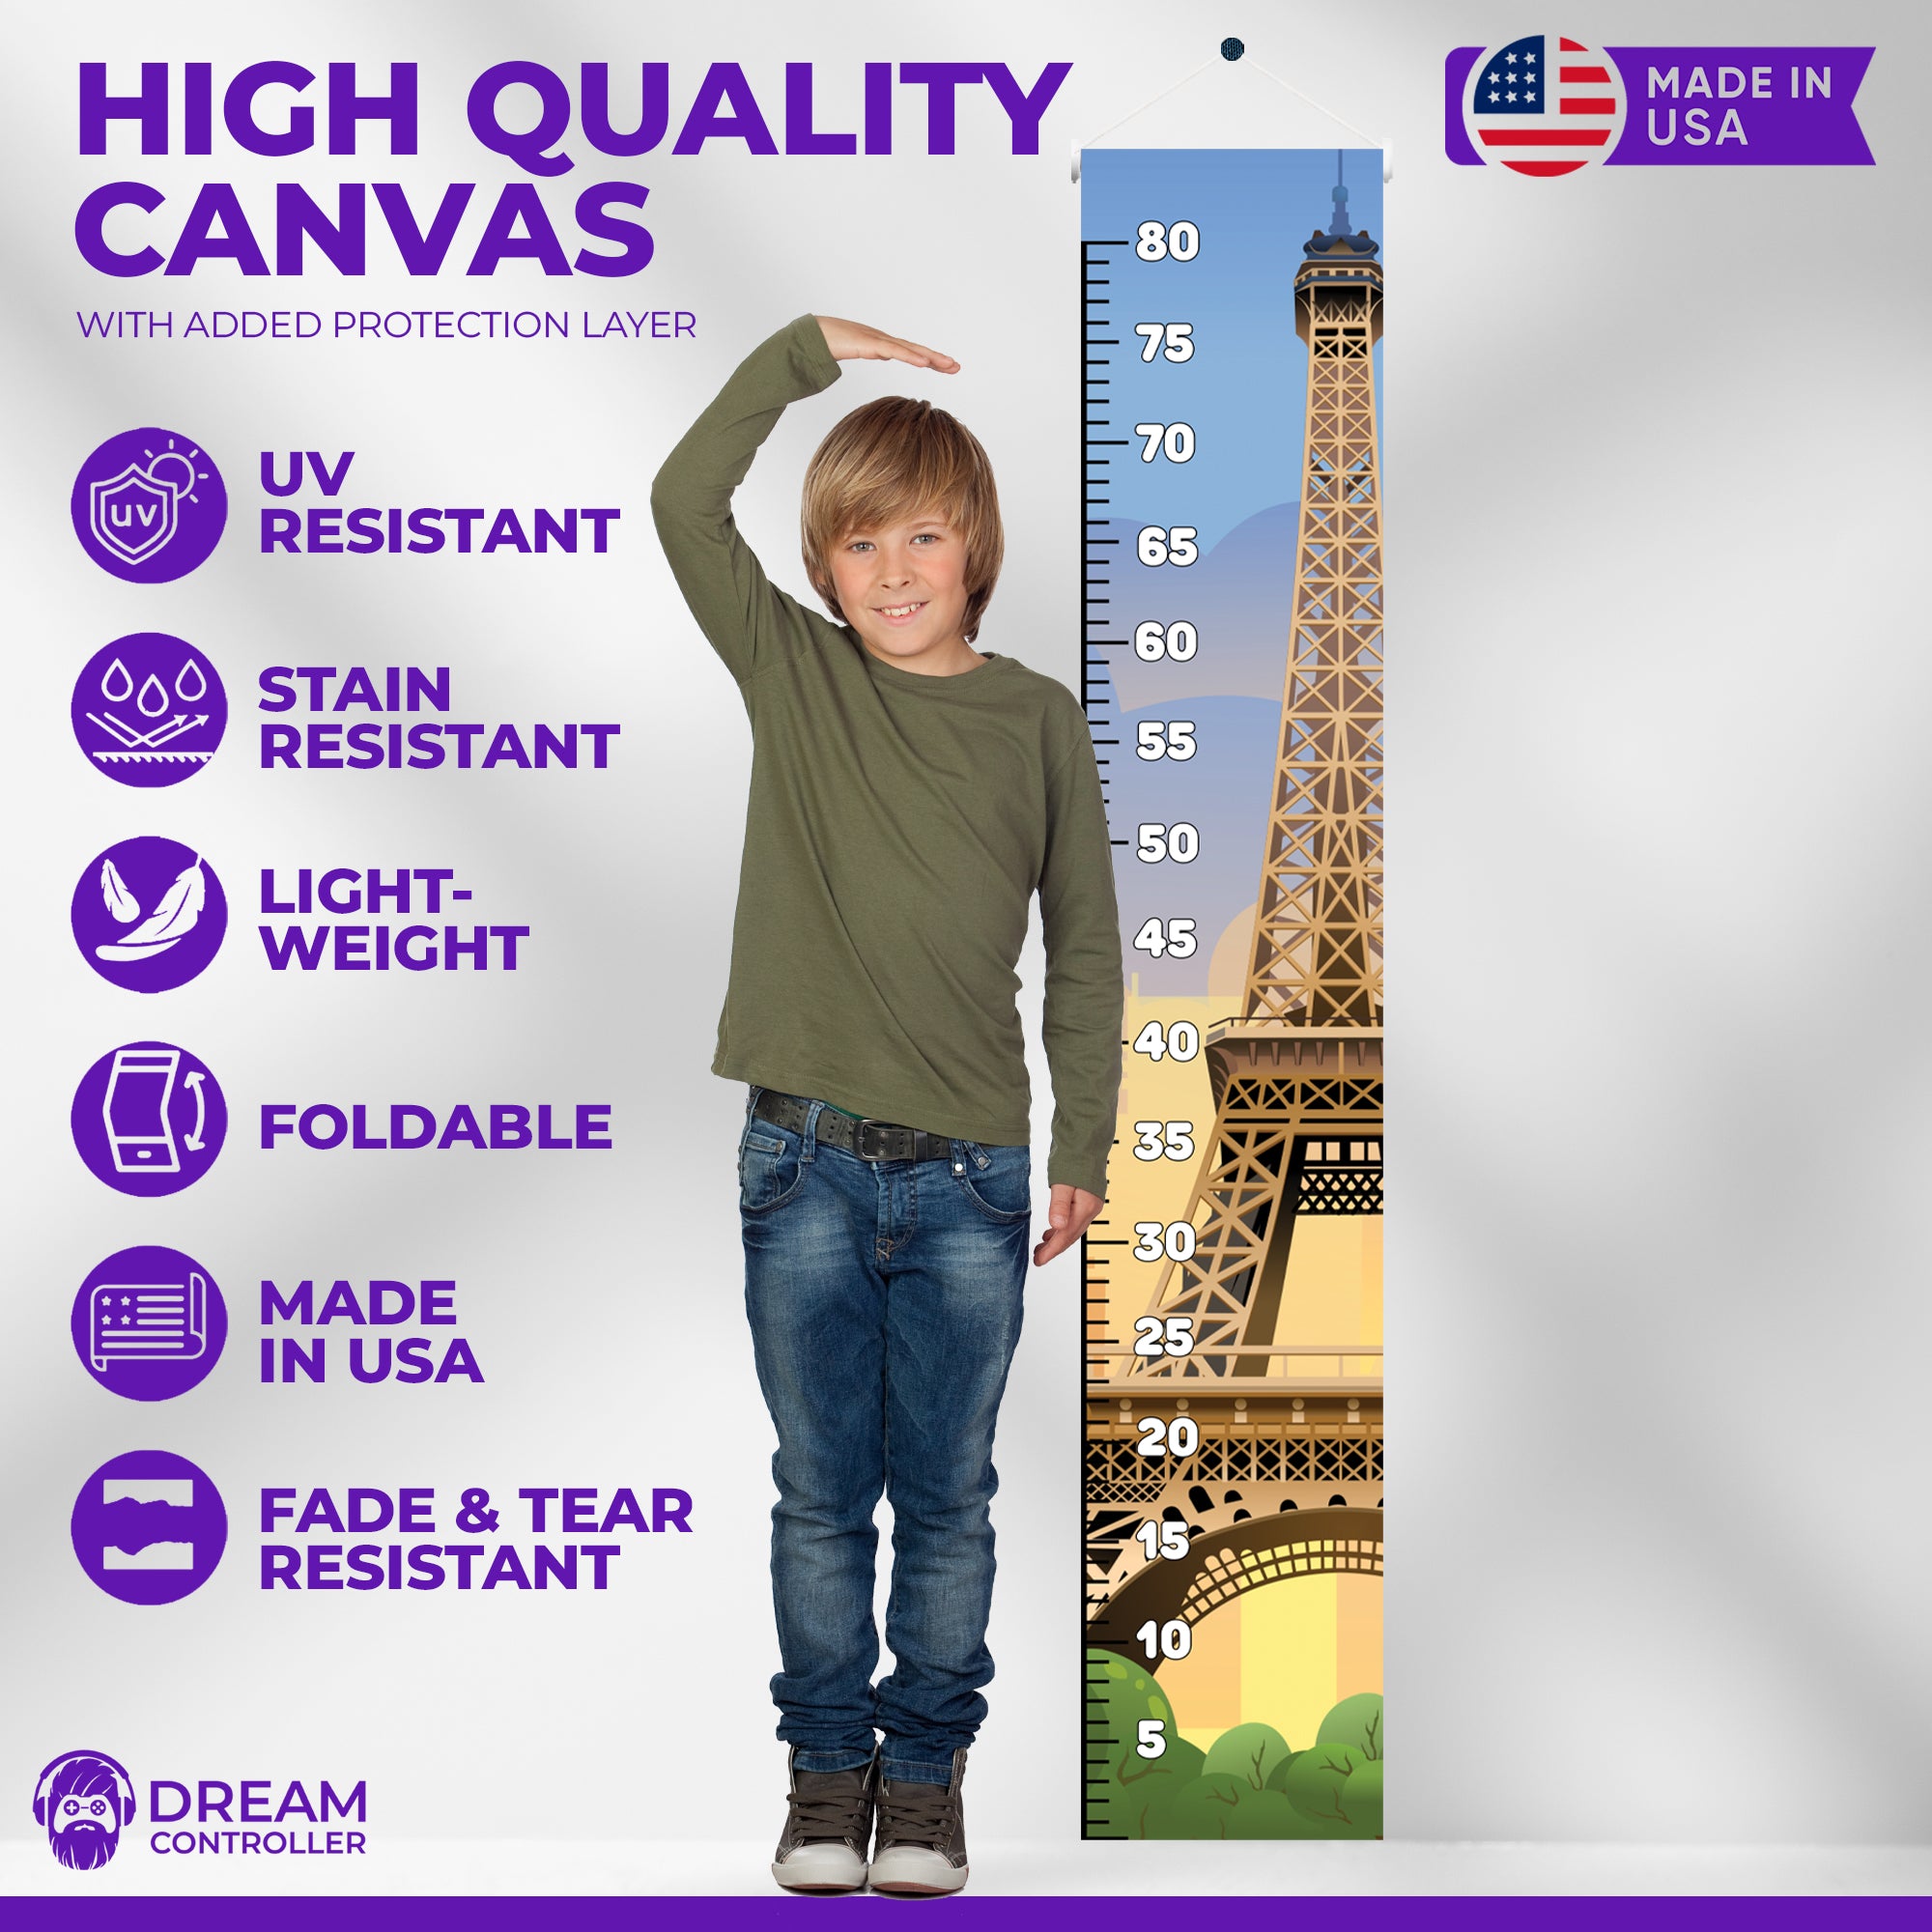 Paris Tower Teens Growth Chart